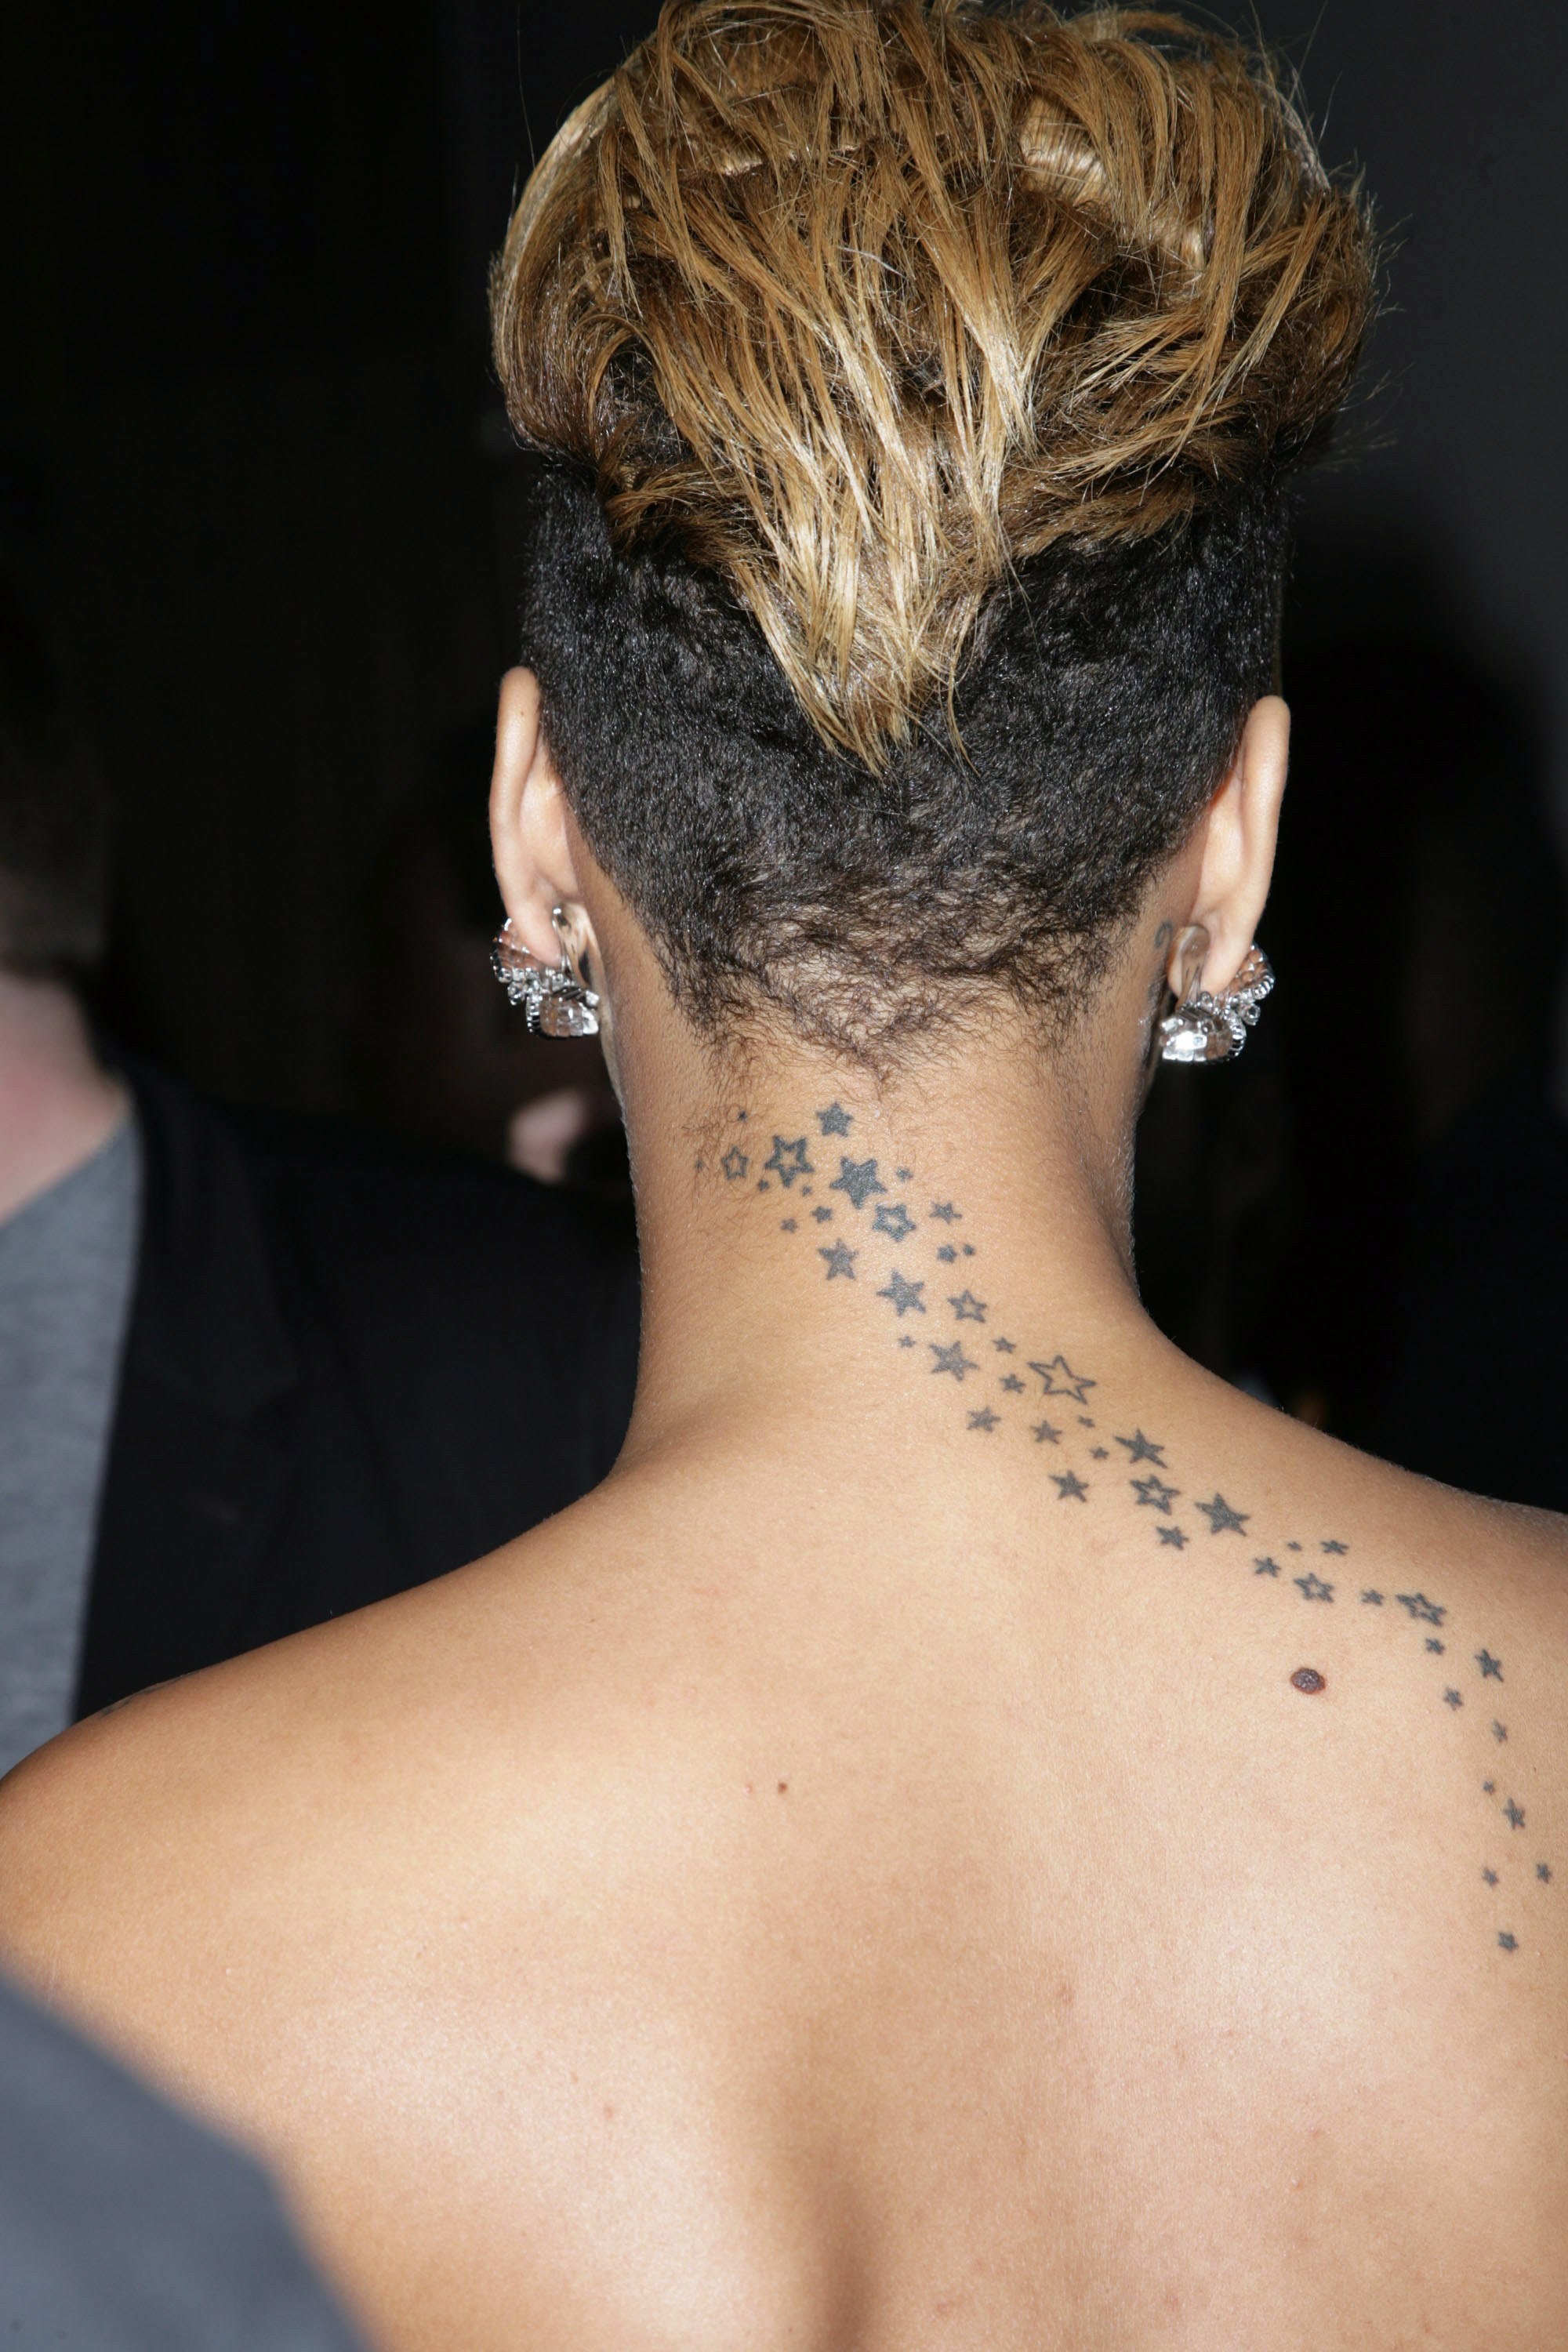 Rihanna's passion with tattoos